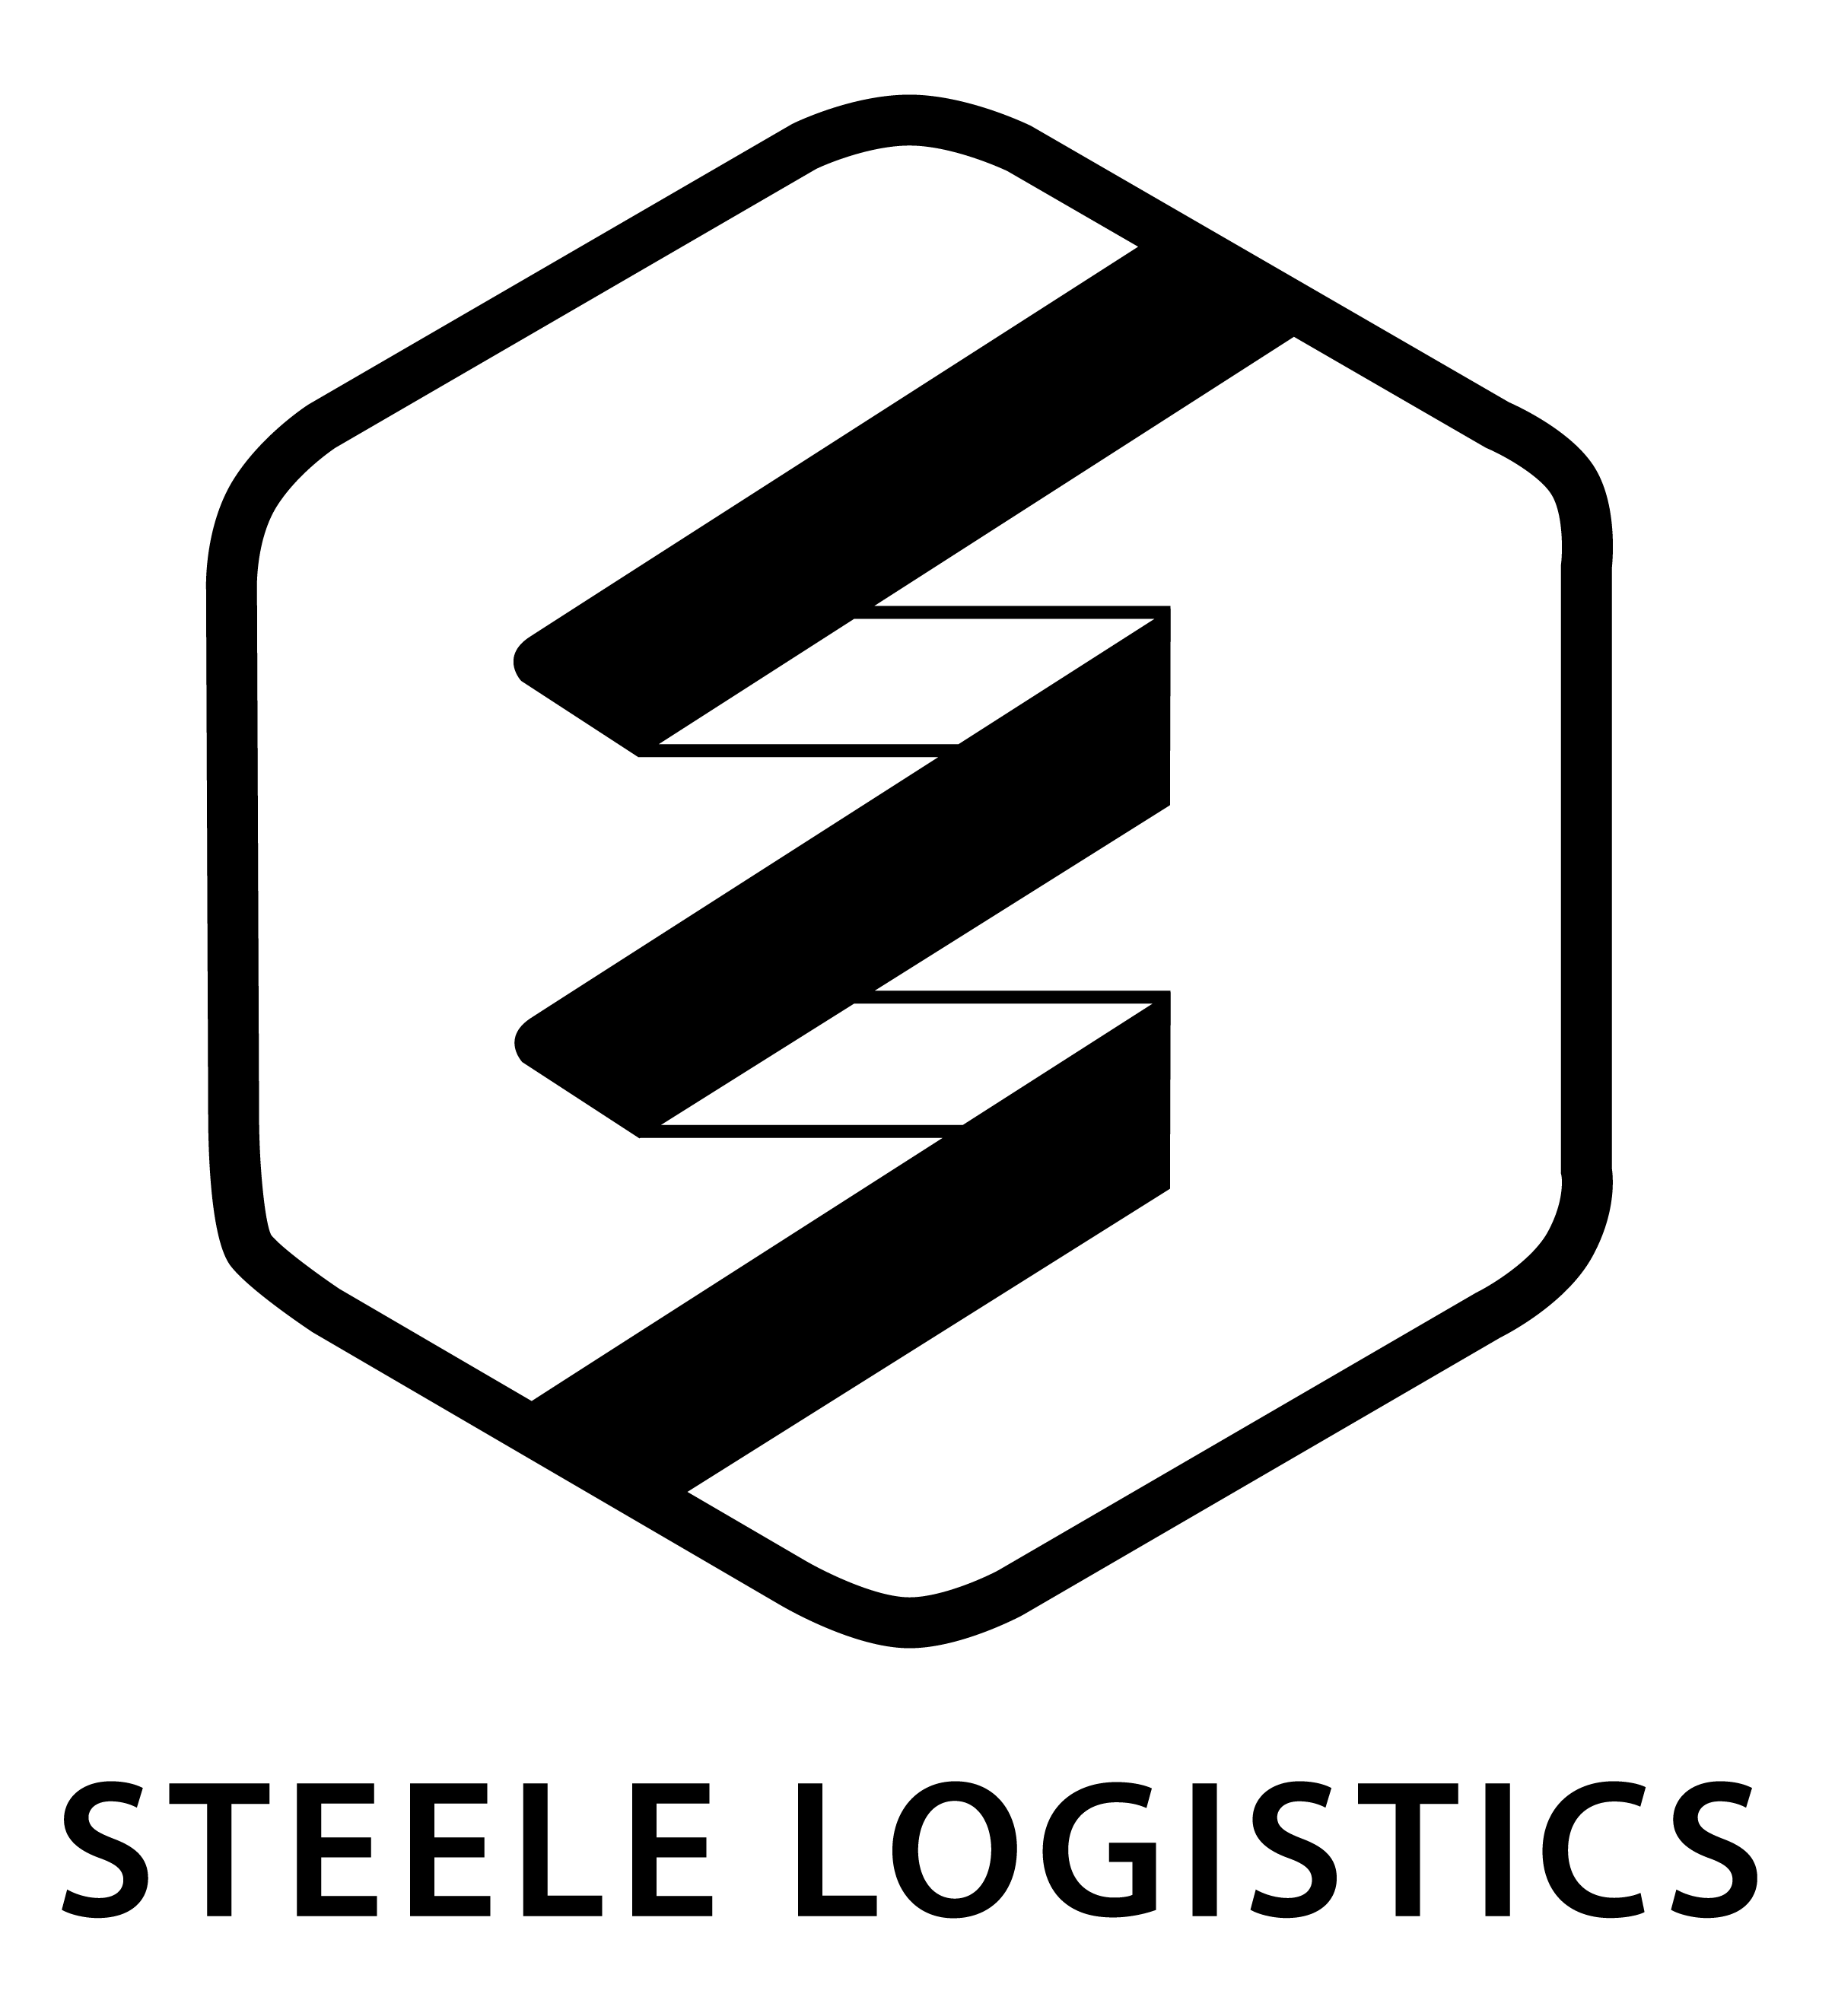 Steele logistics logo